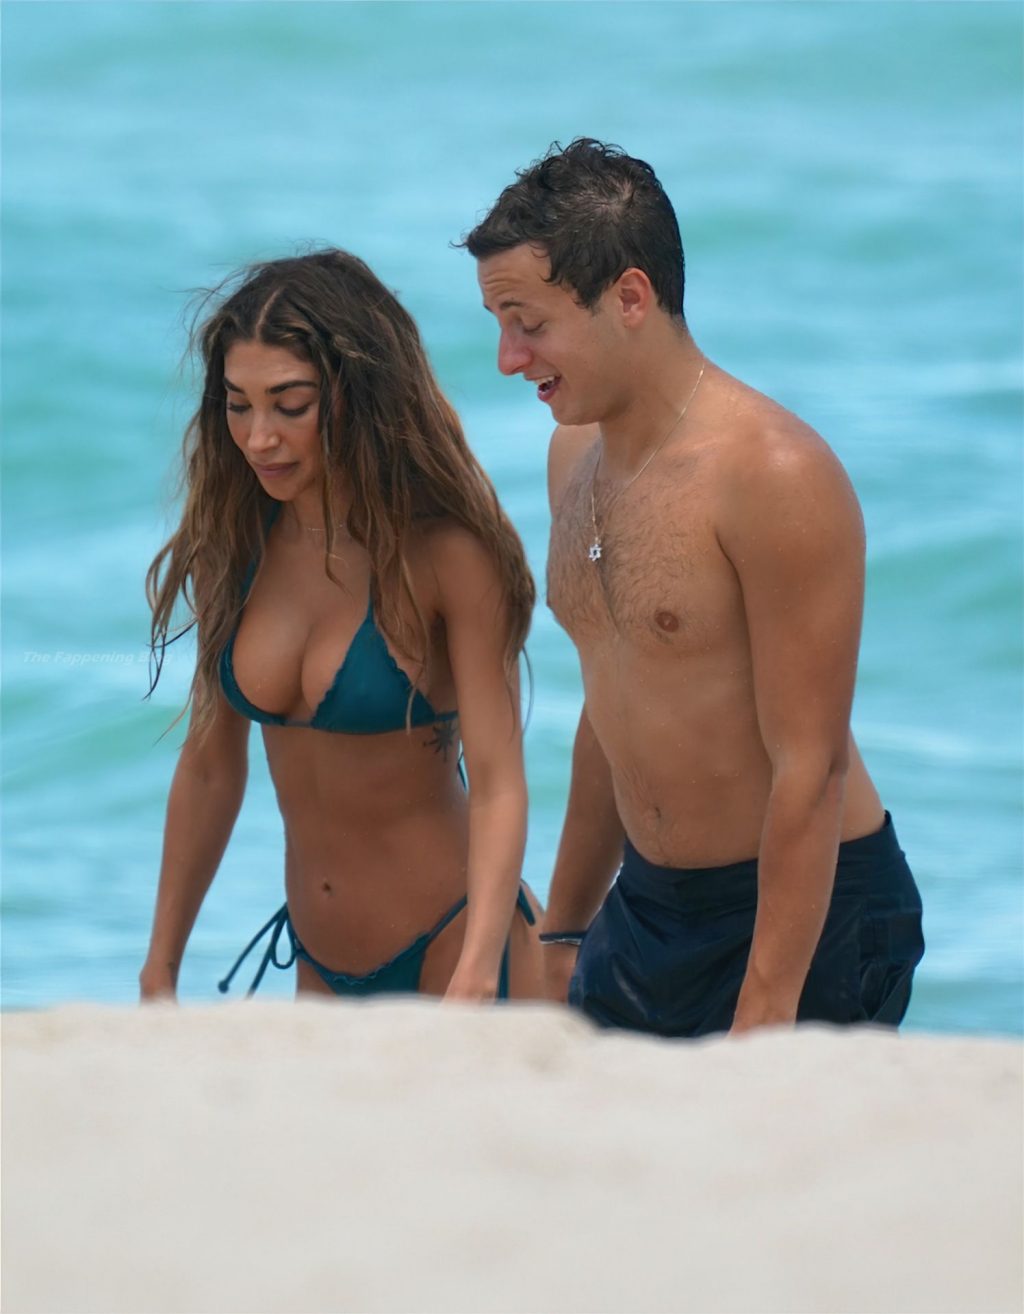 Chantel Jeffries Looks Amazing in a Green Bikini on the Beach in Miami (86 Photos)